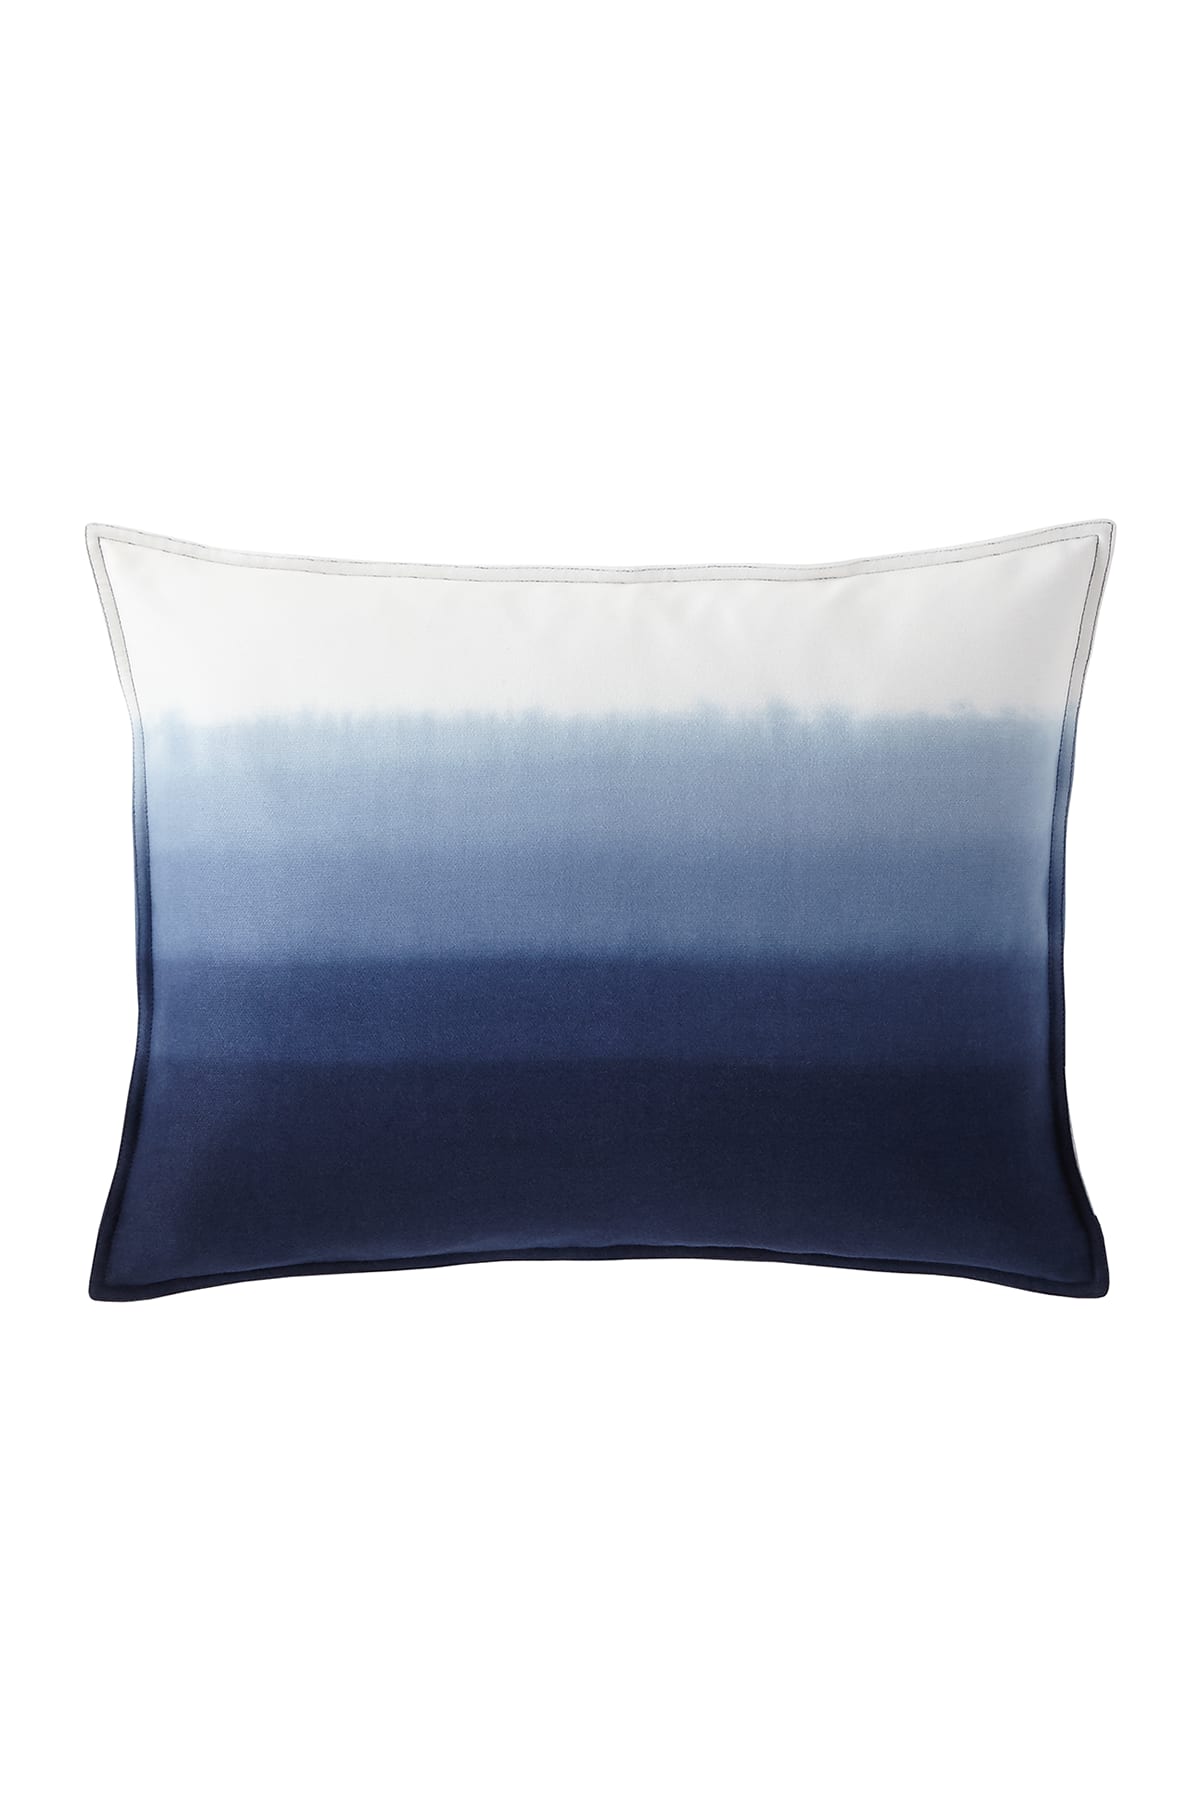 Image Lauren Ralph Lauren Flora Dip-Dye Decorative Pillow, 15" x 20"